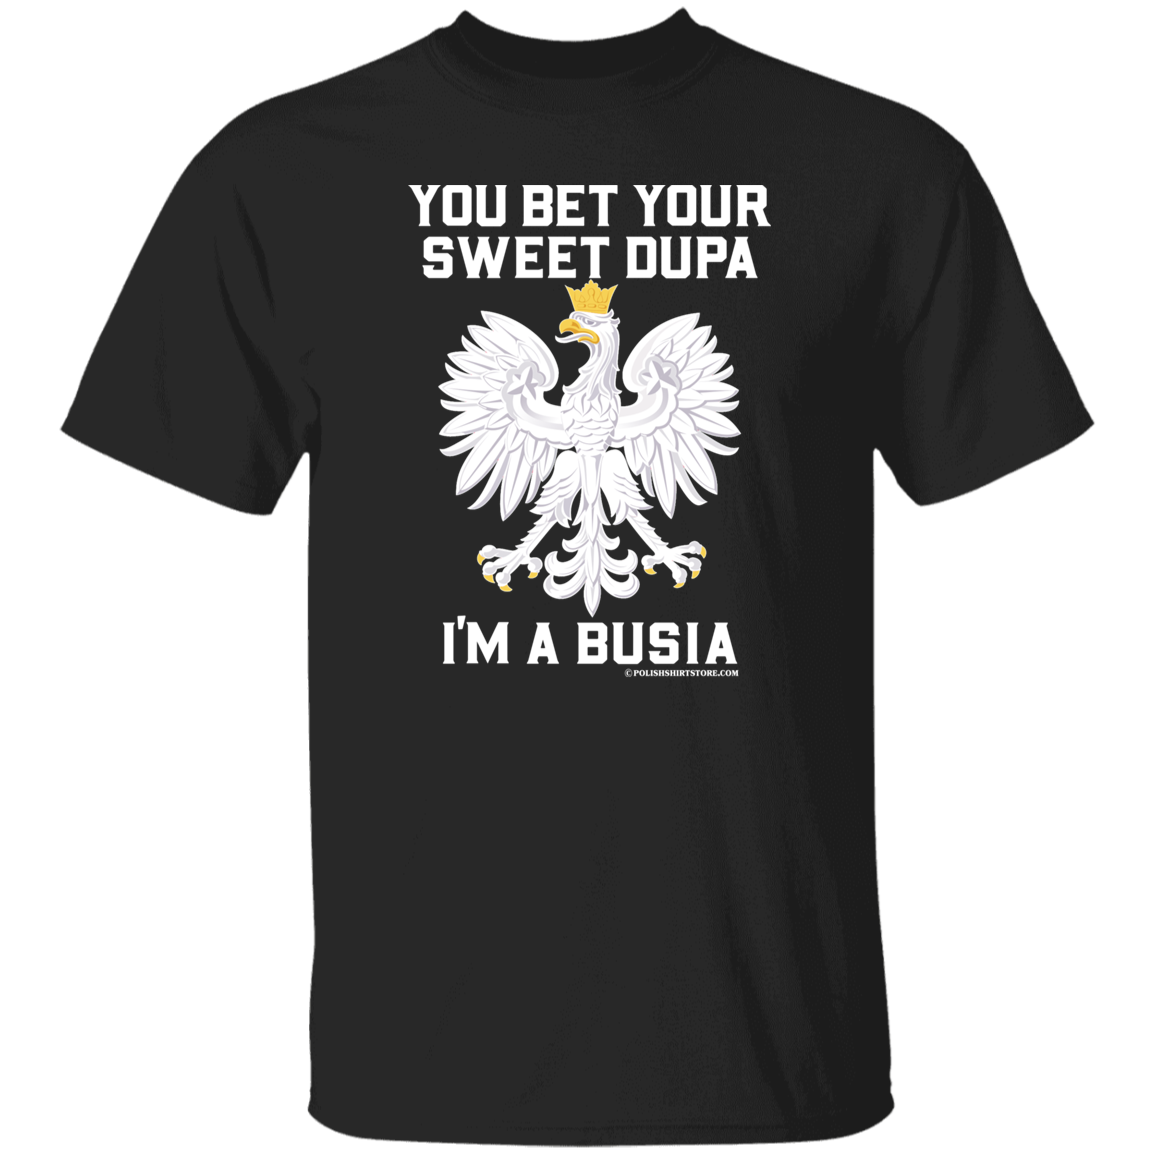 You Bet Your Sweet Dupa I'm A Busia Apparel CustomCat G500 5.3 oz. T-Shirt Black S